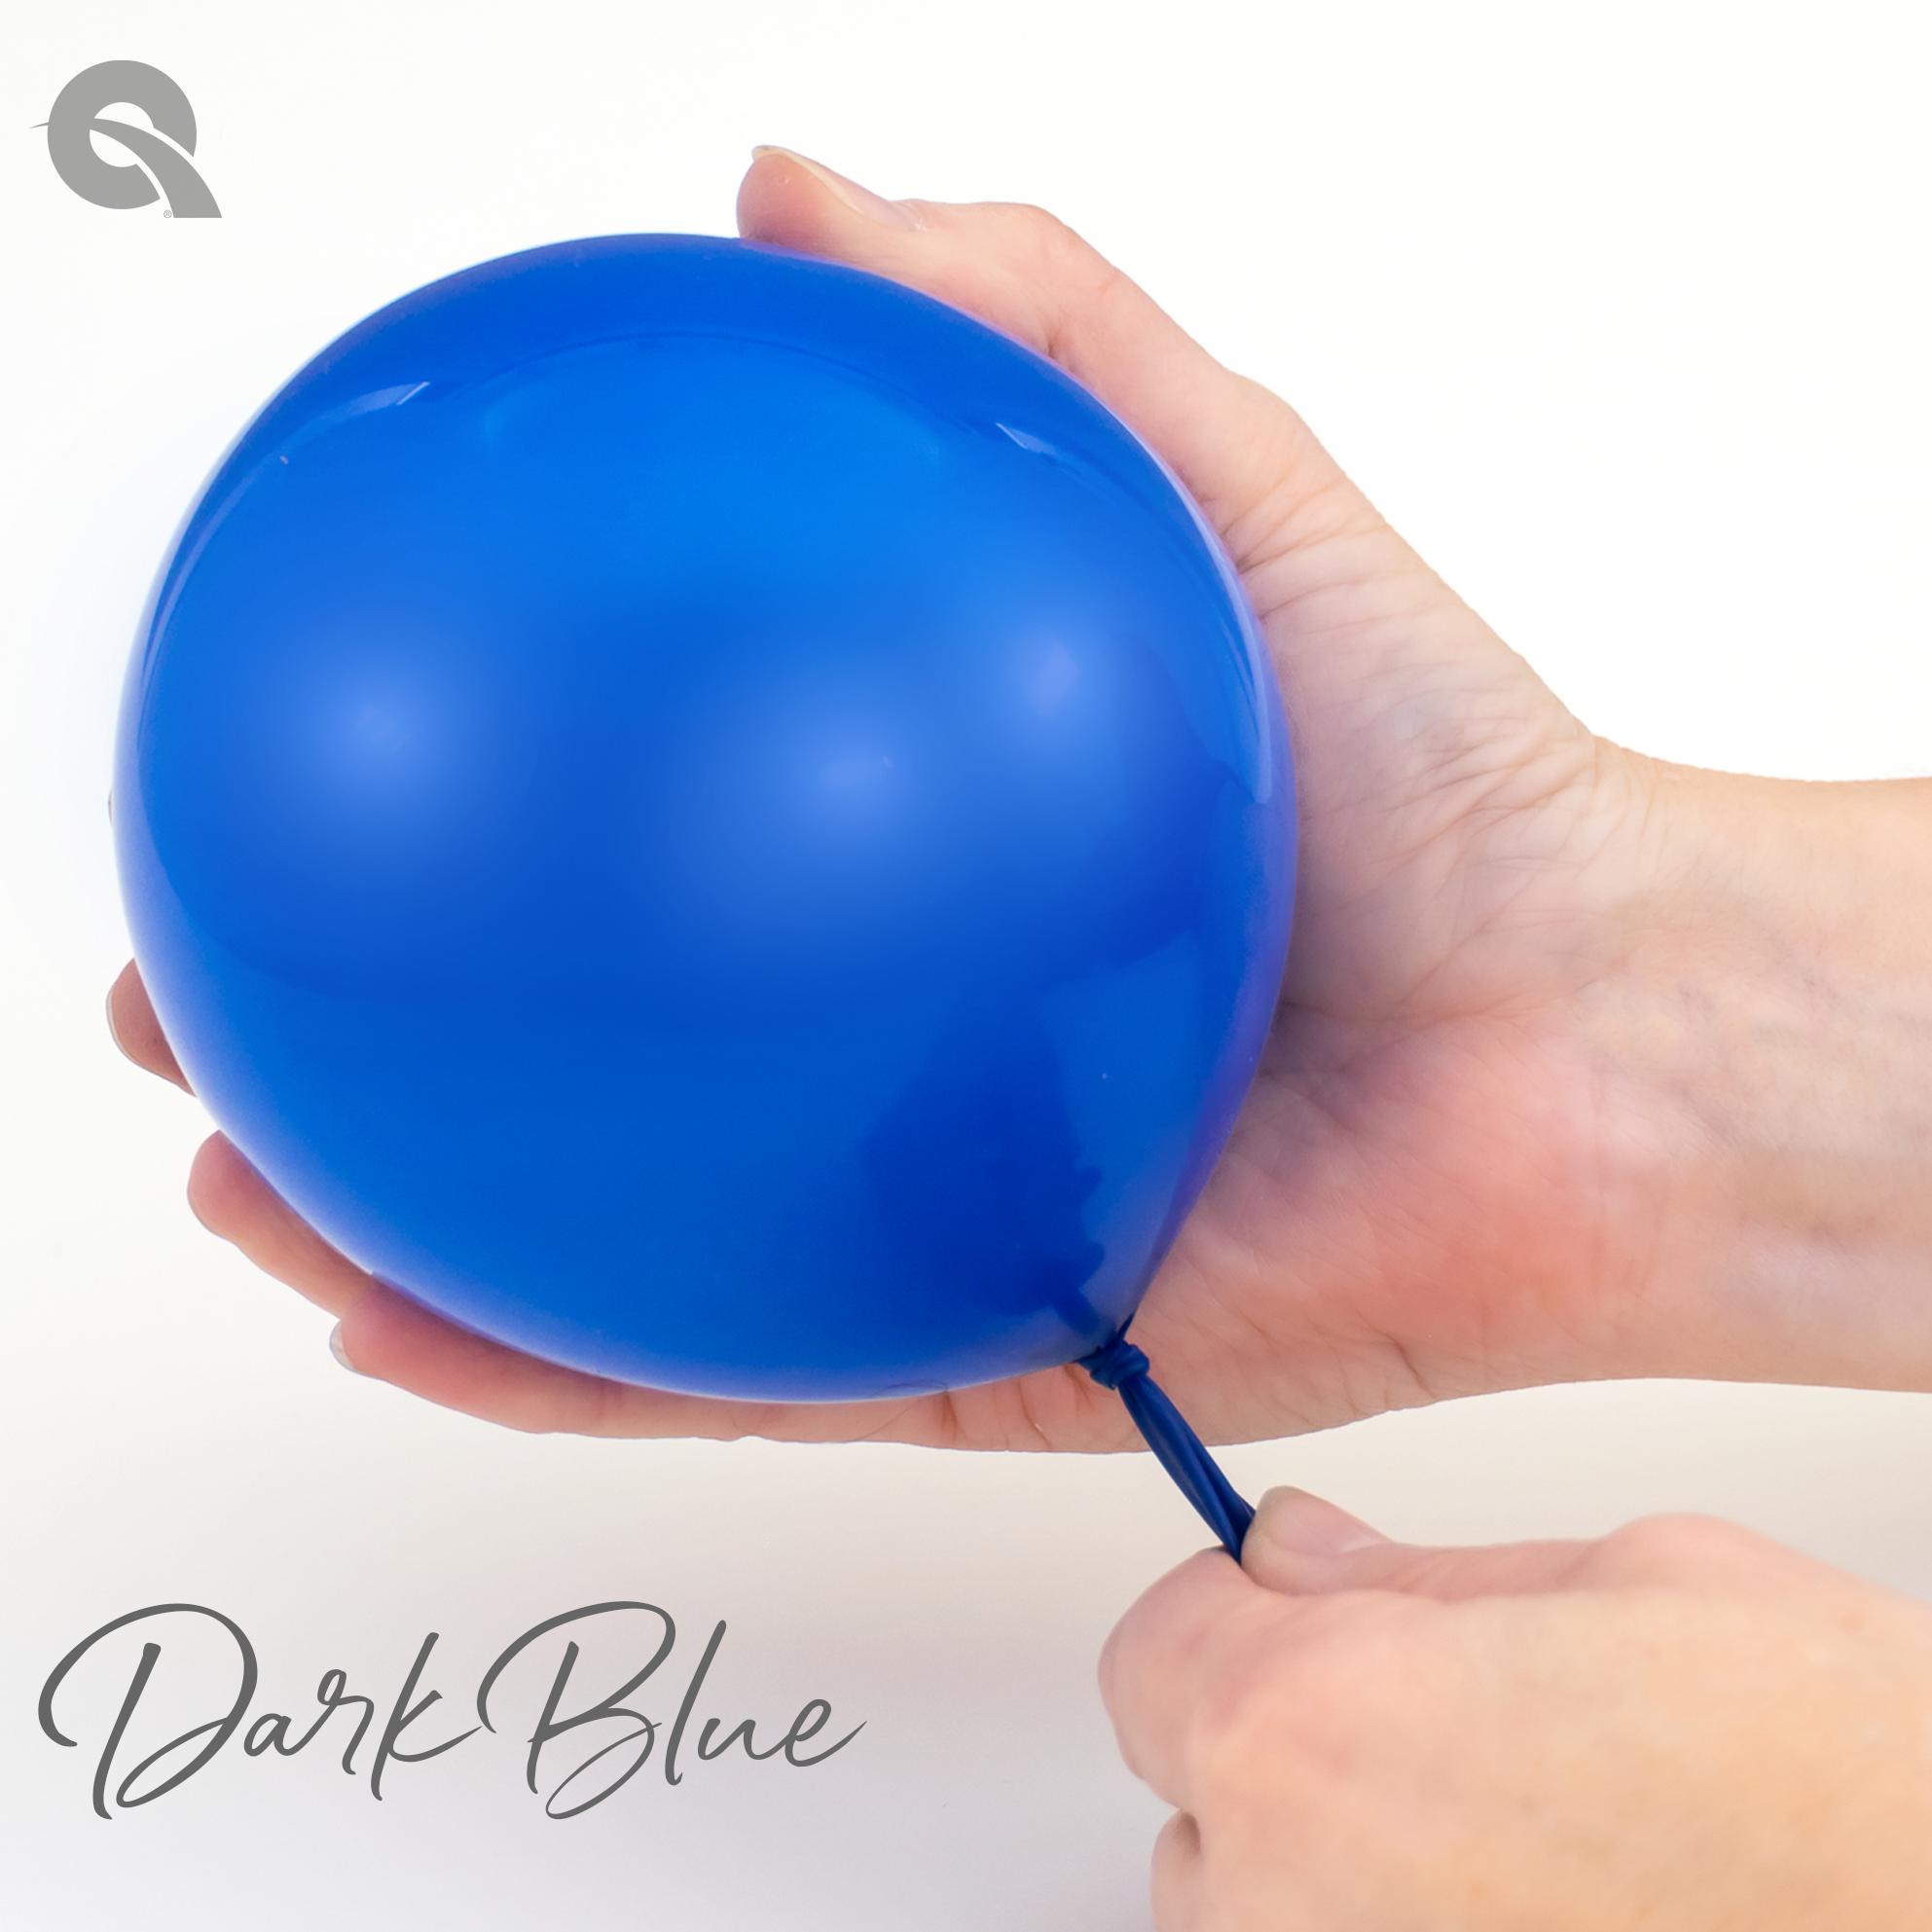 11" Qualatex Dark Blue Latex Balloons | 100 Count